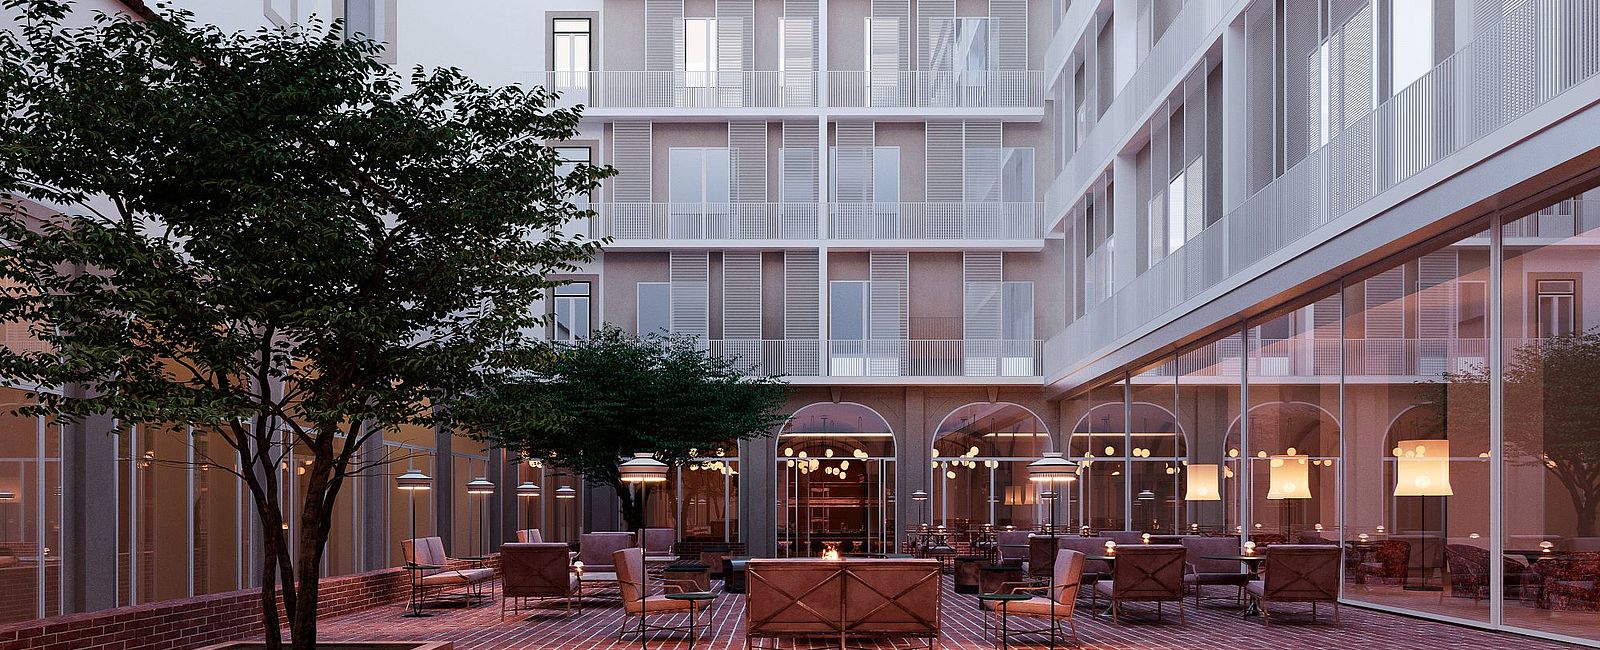 HOTELERÖFFNUNG NEWS
 IHG Hotels eröffnet Convent Square Lisbon  
